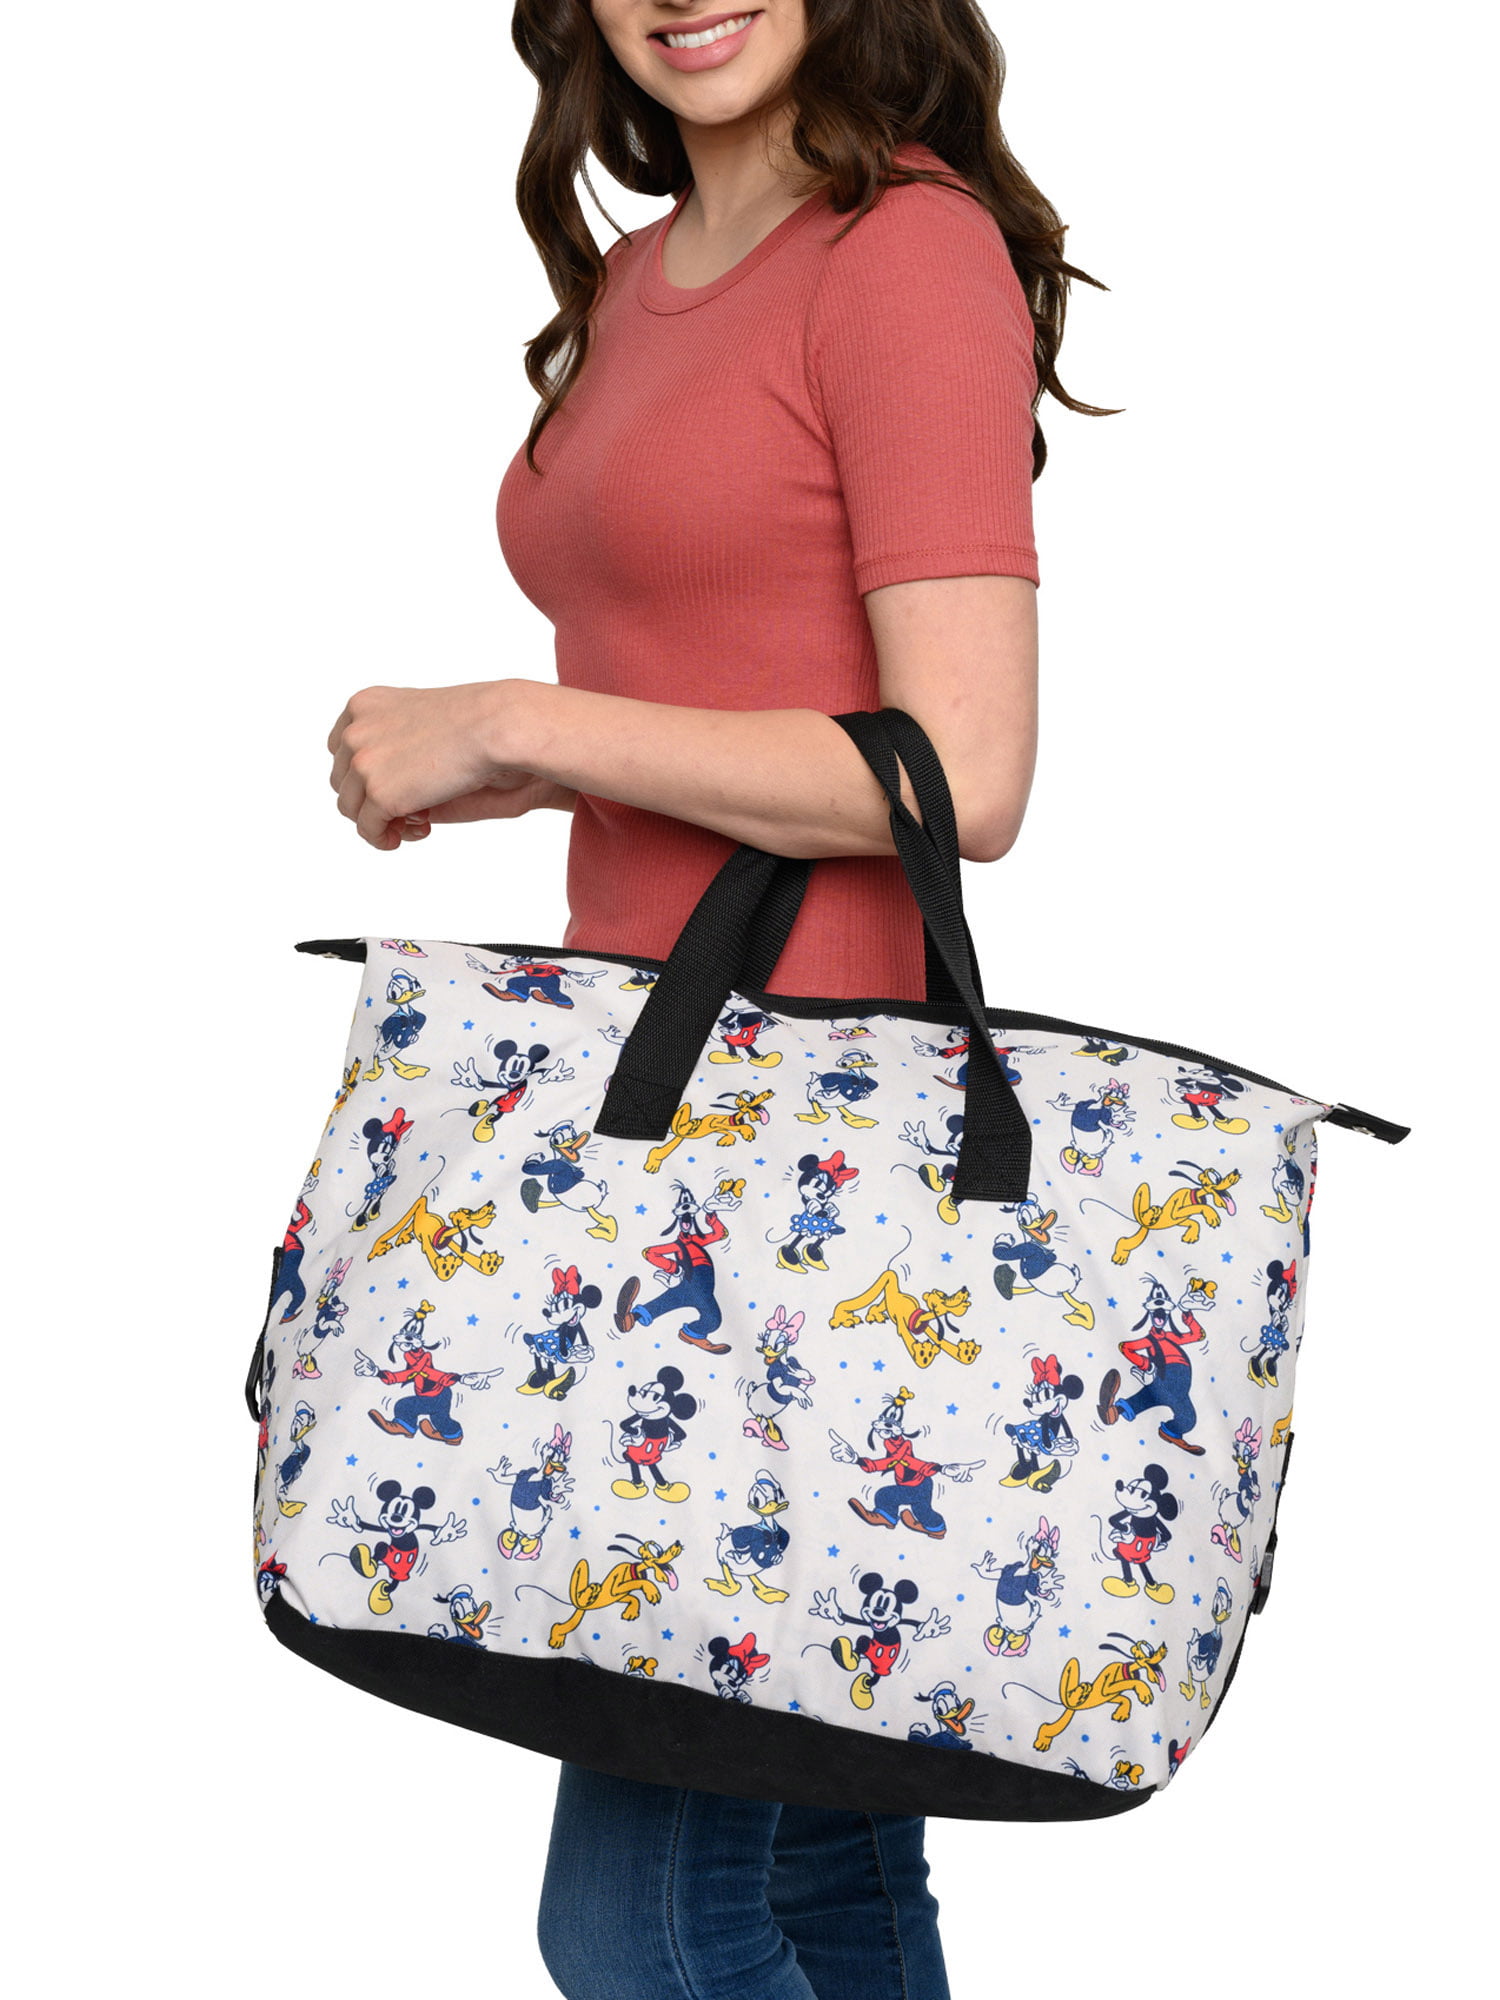 Mickey Bag Cartoon Travel Bag Women's Large Capacity Business Trip